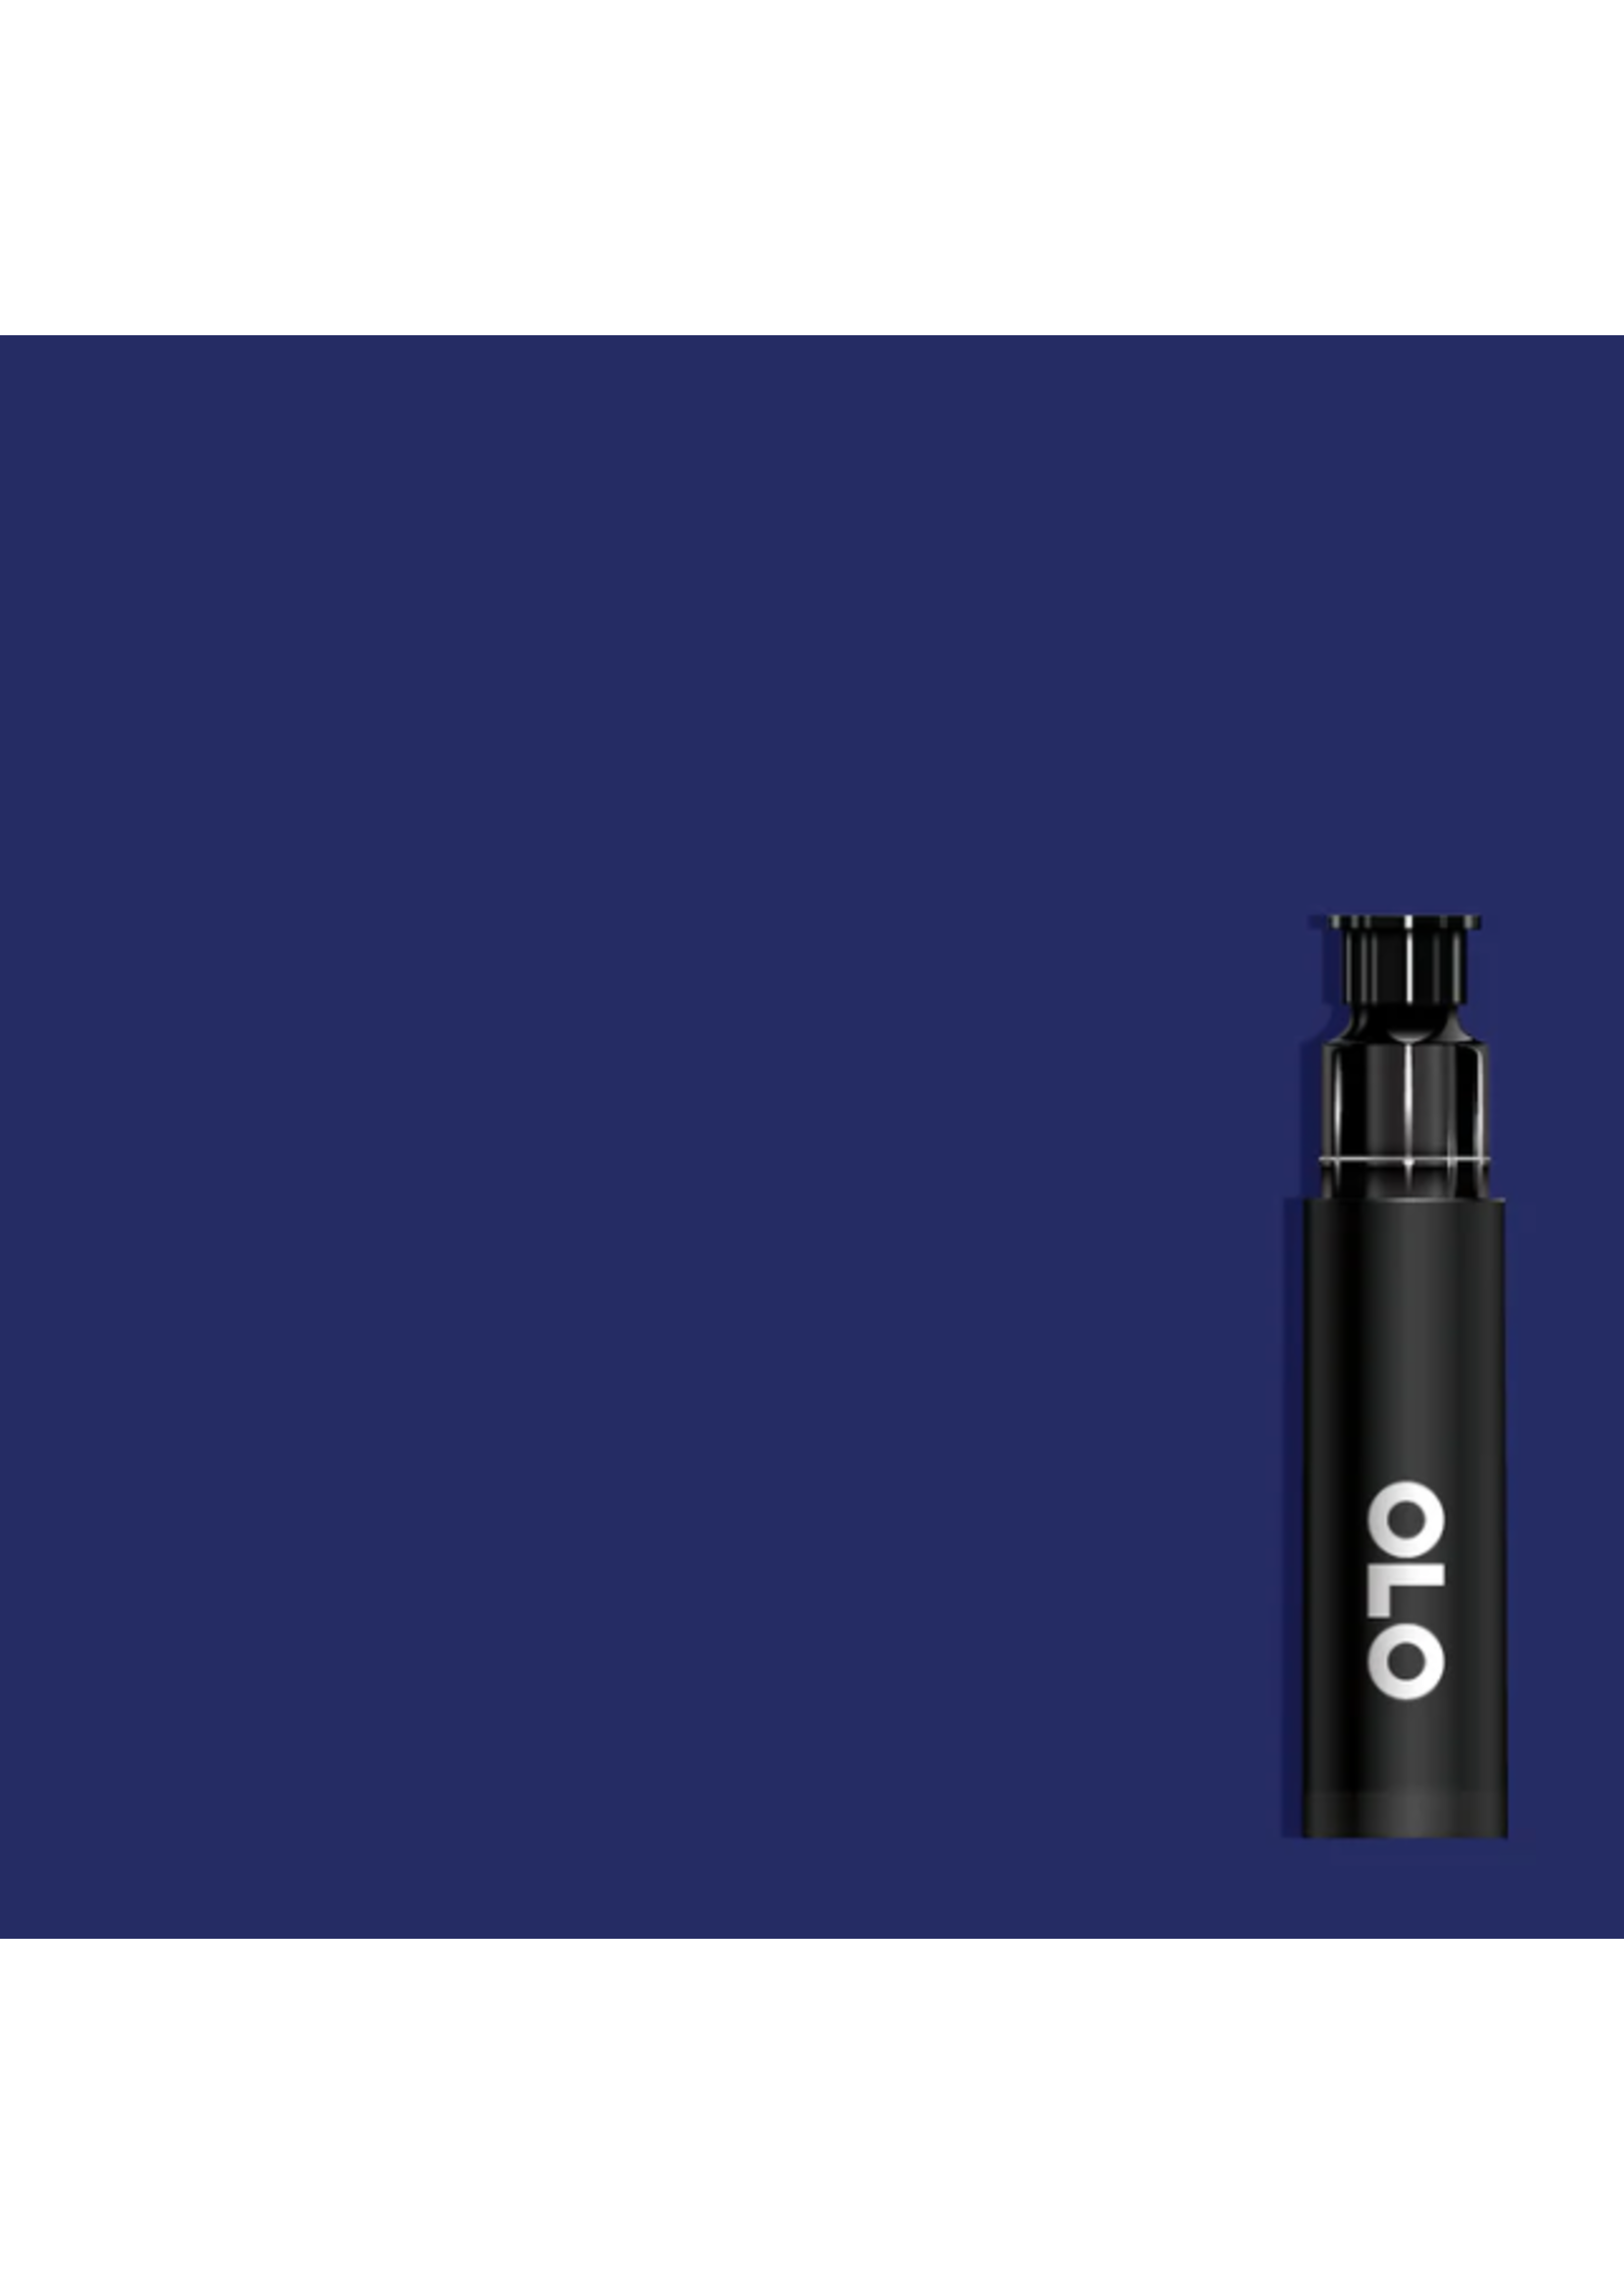 OLO OLO Brush Replacement Cartridge: Indigo